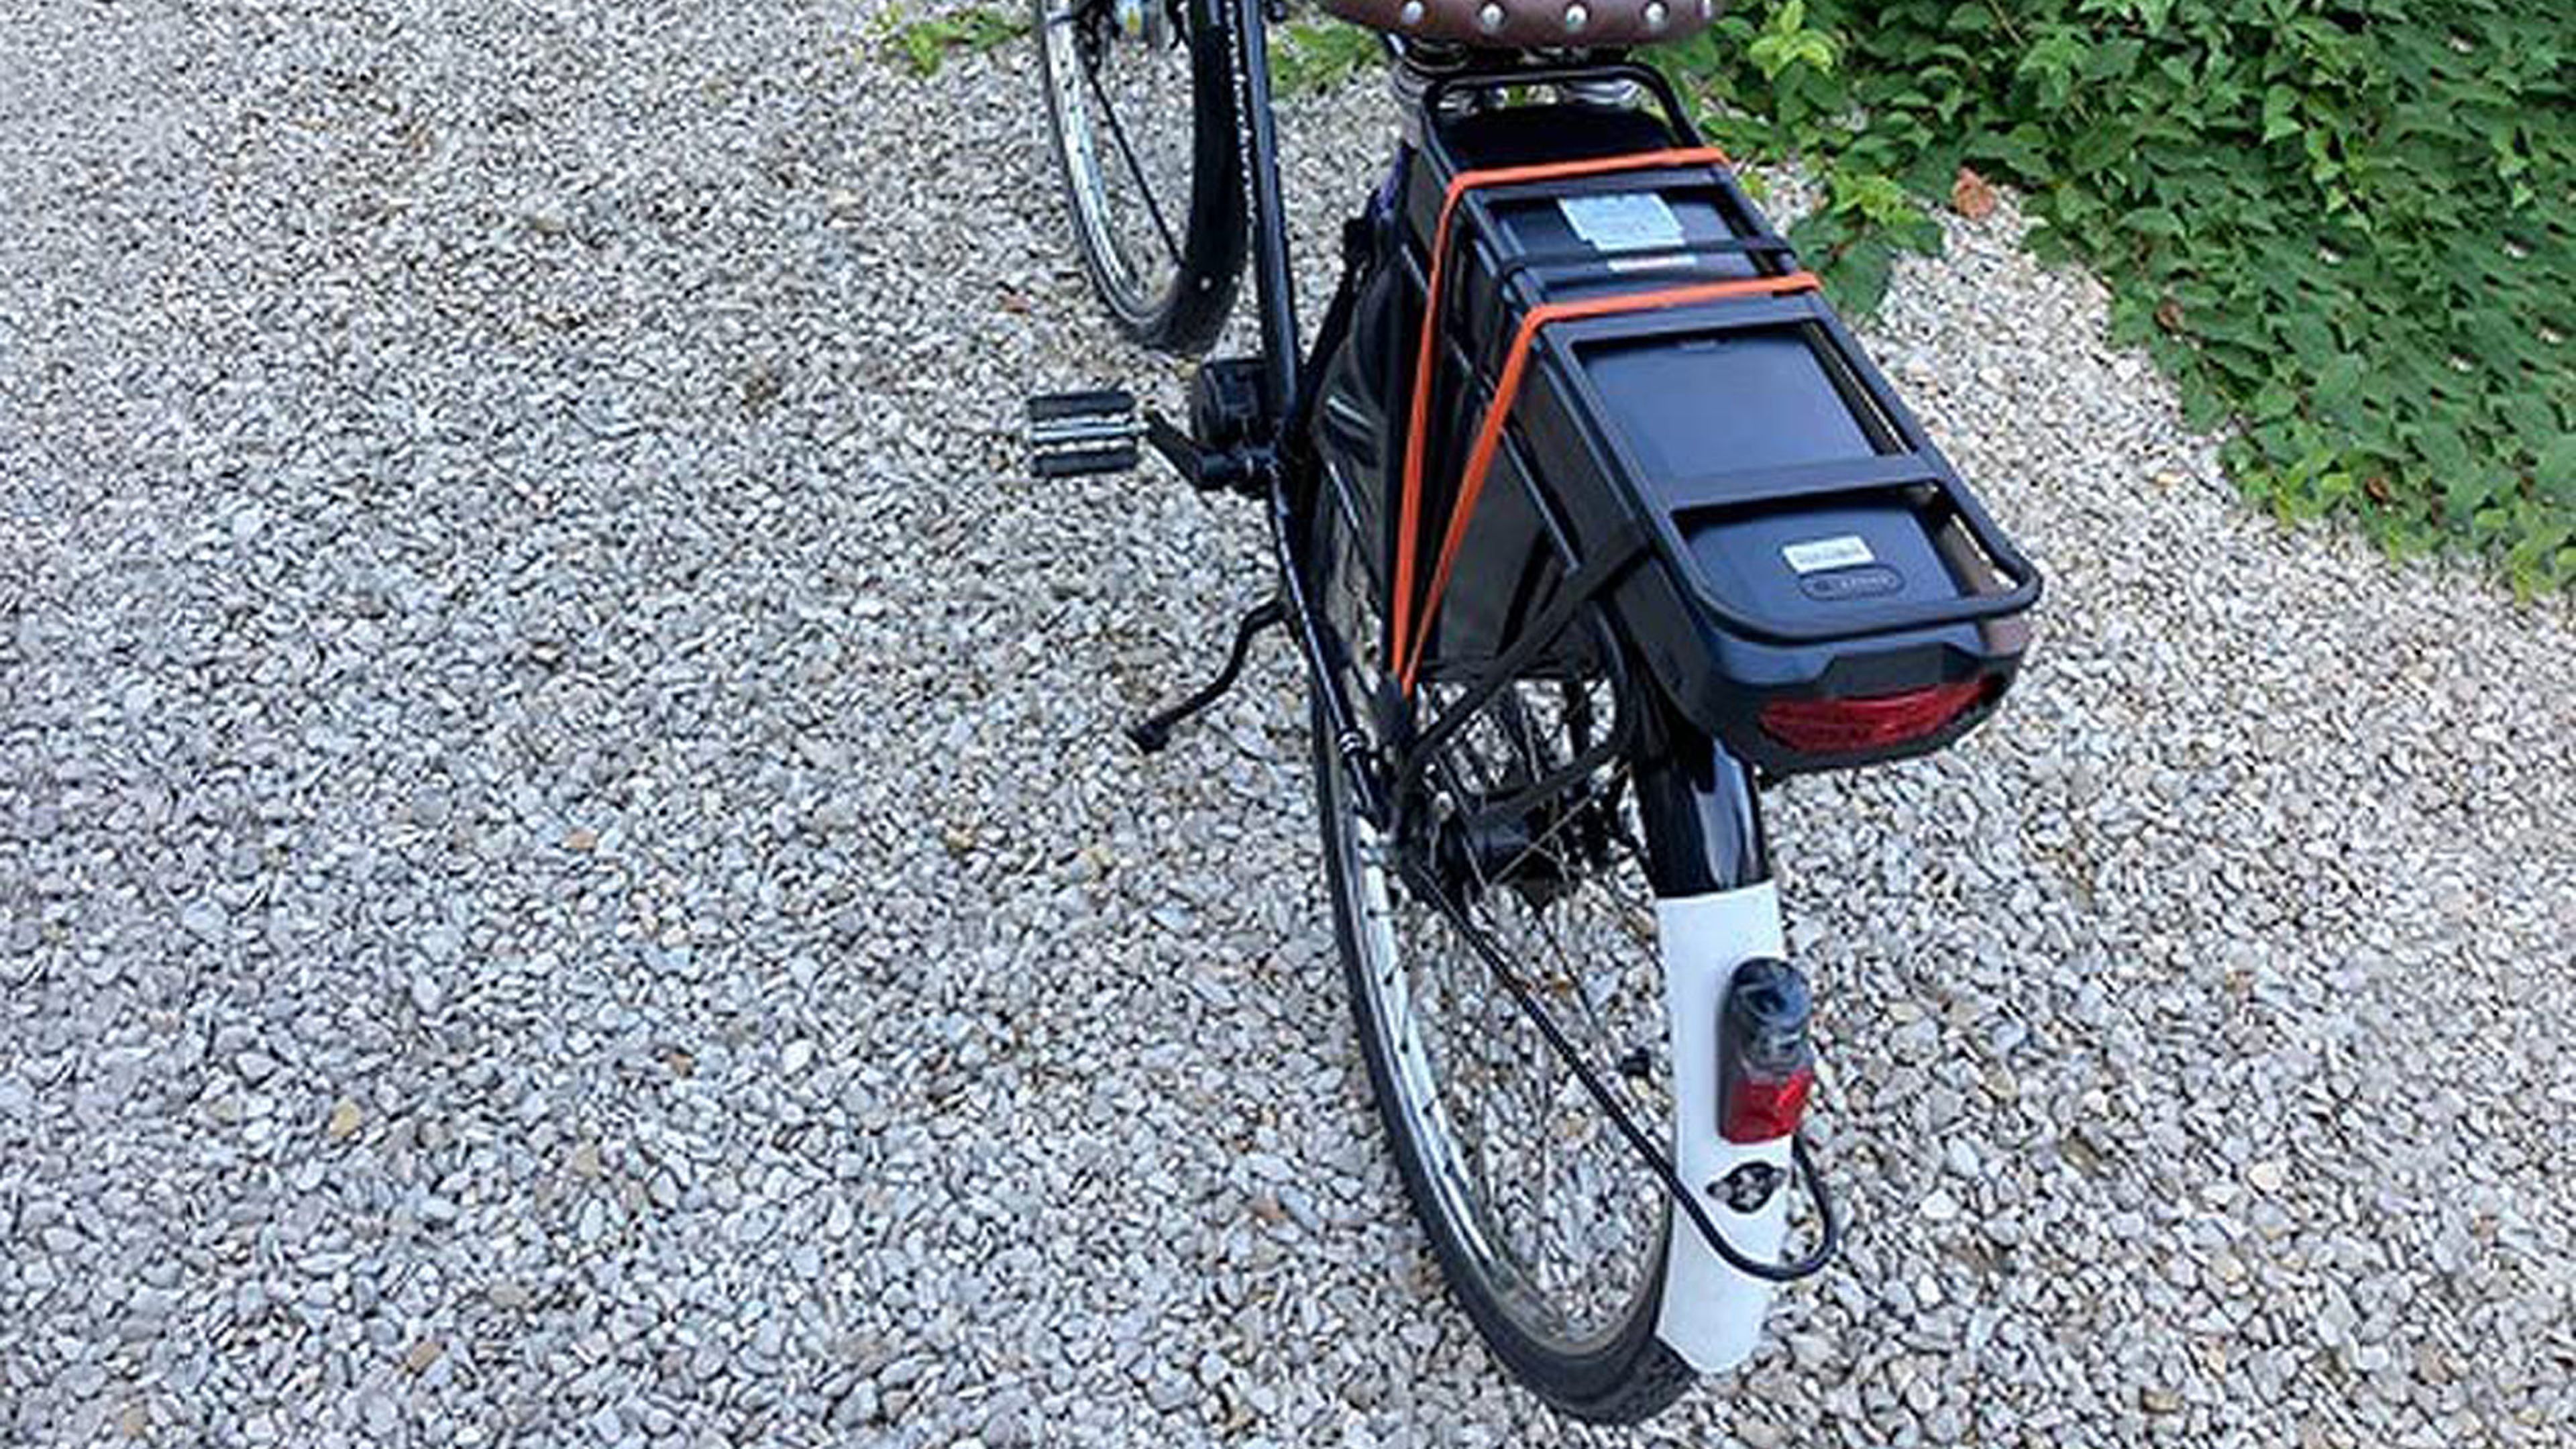 Kits de Conversión de Bicis Eléctricas: Guía para Electrificar tu Bicicleta  - Con Alforjas